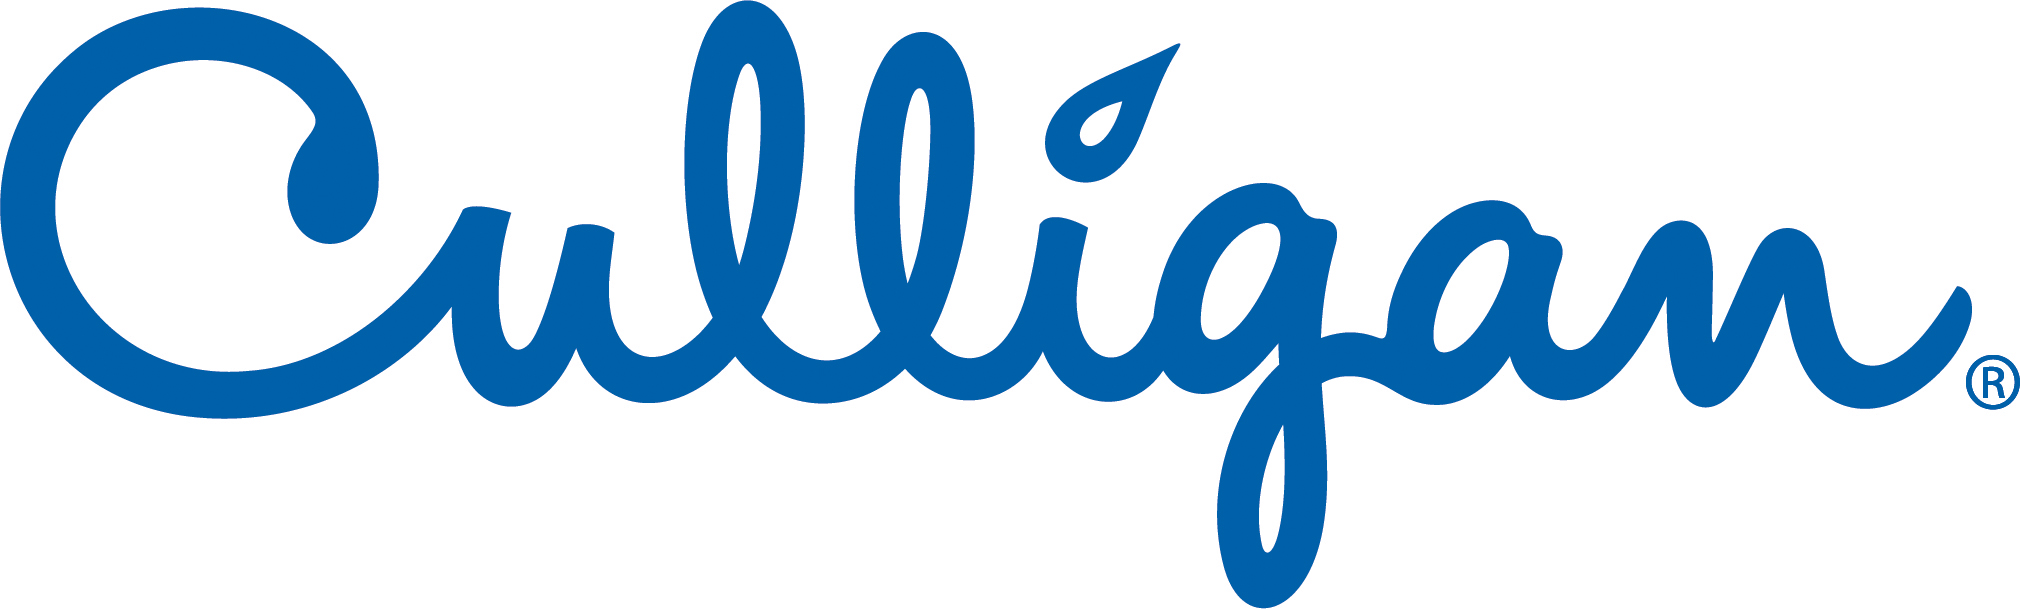 Logomark for Culligan